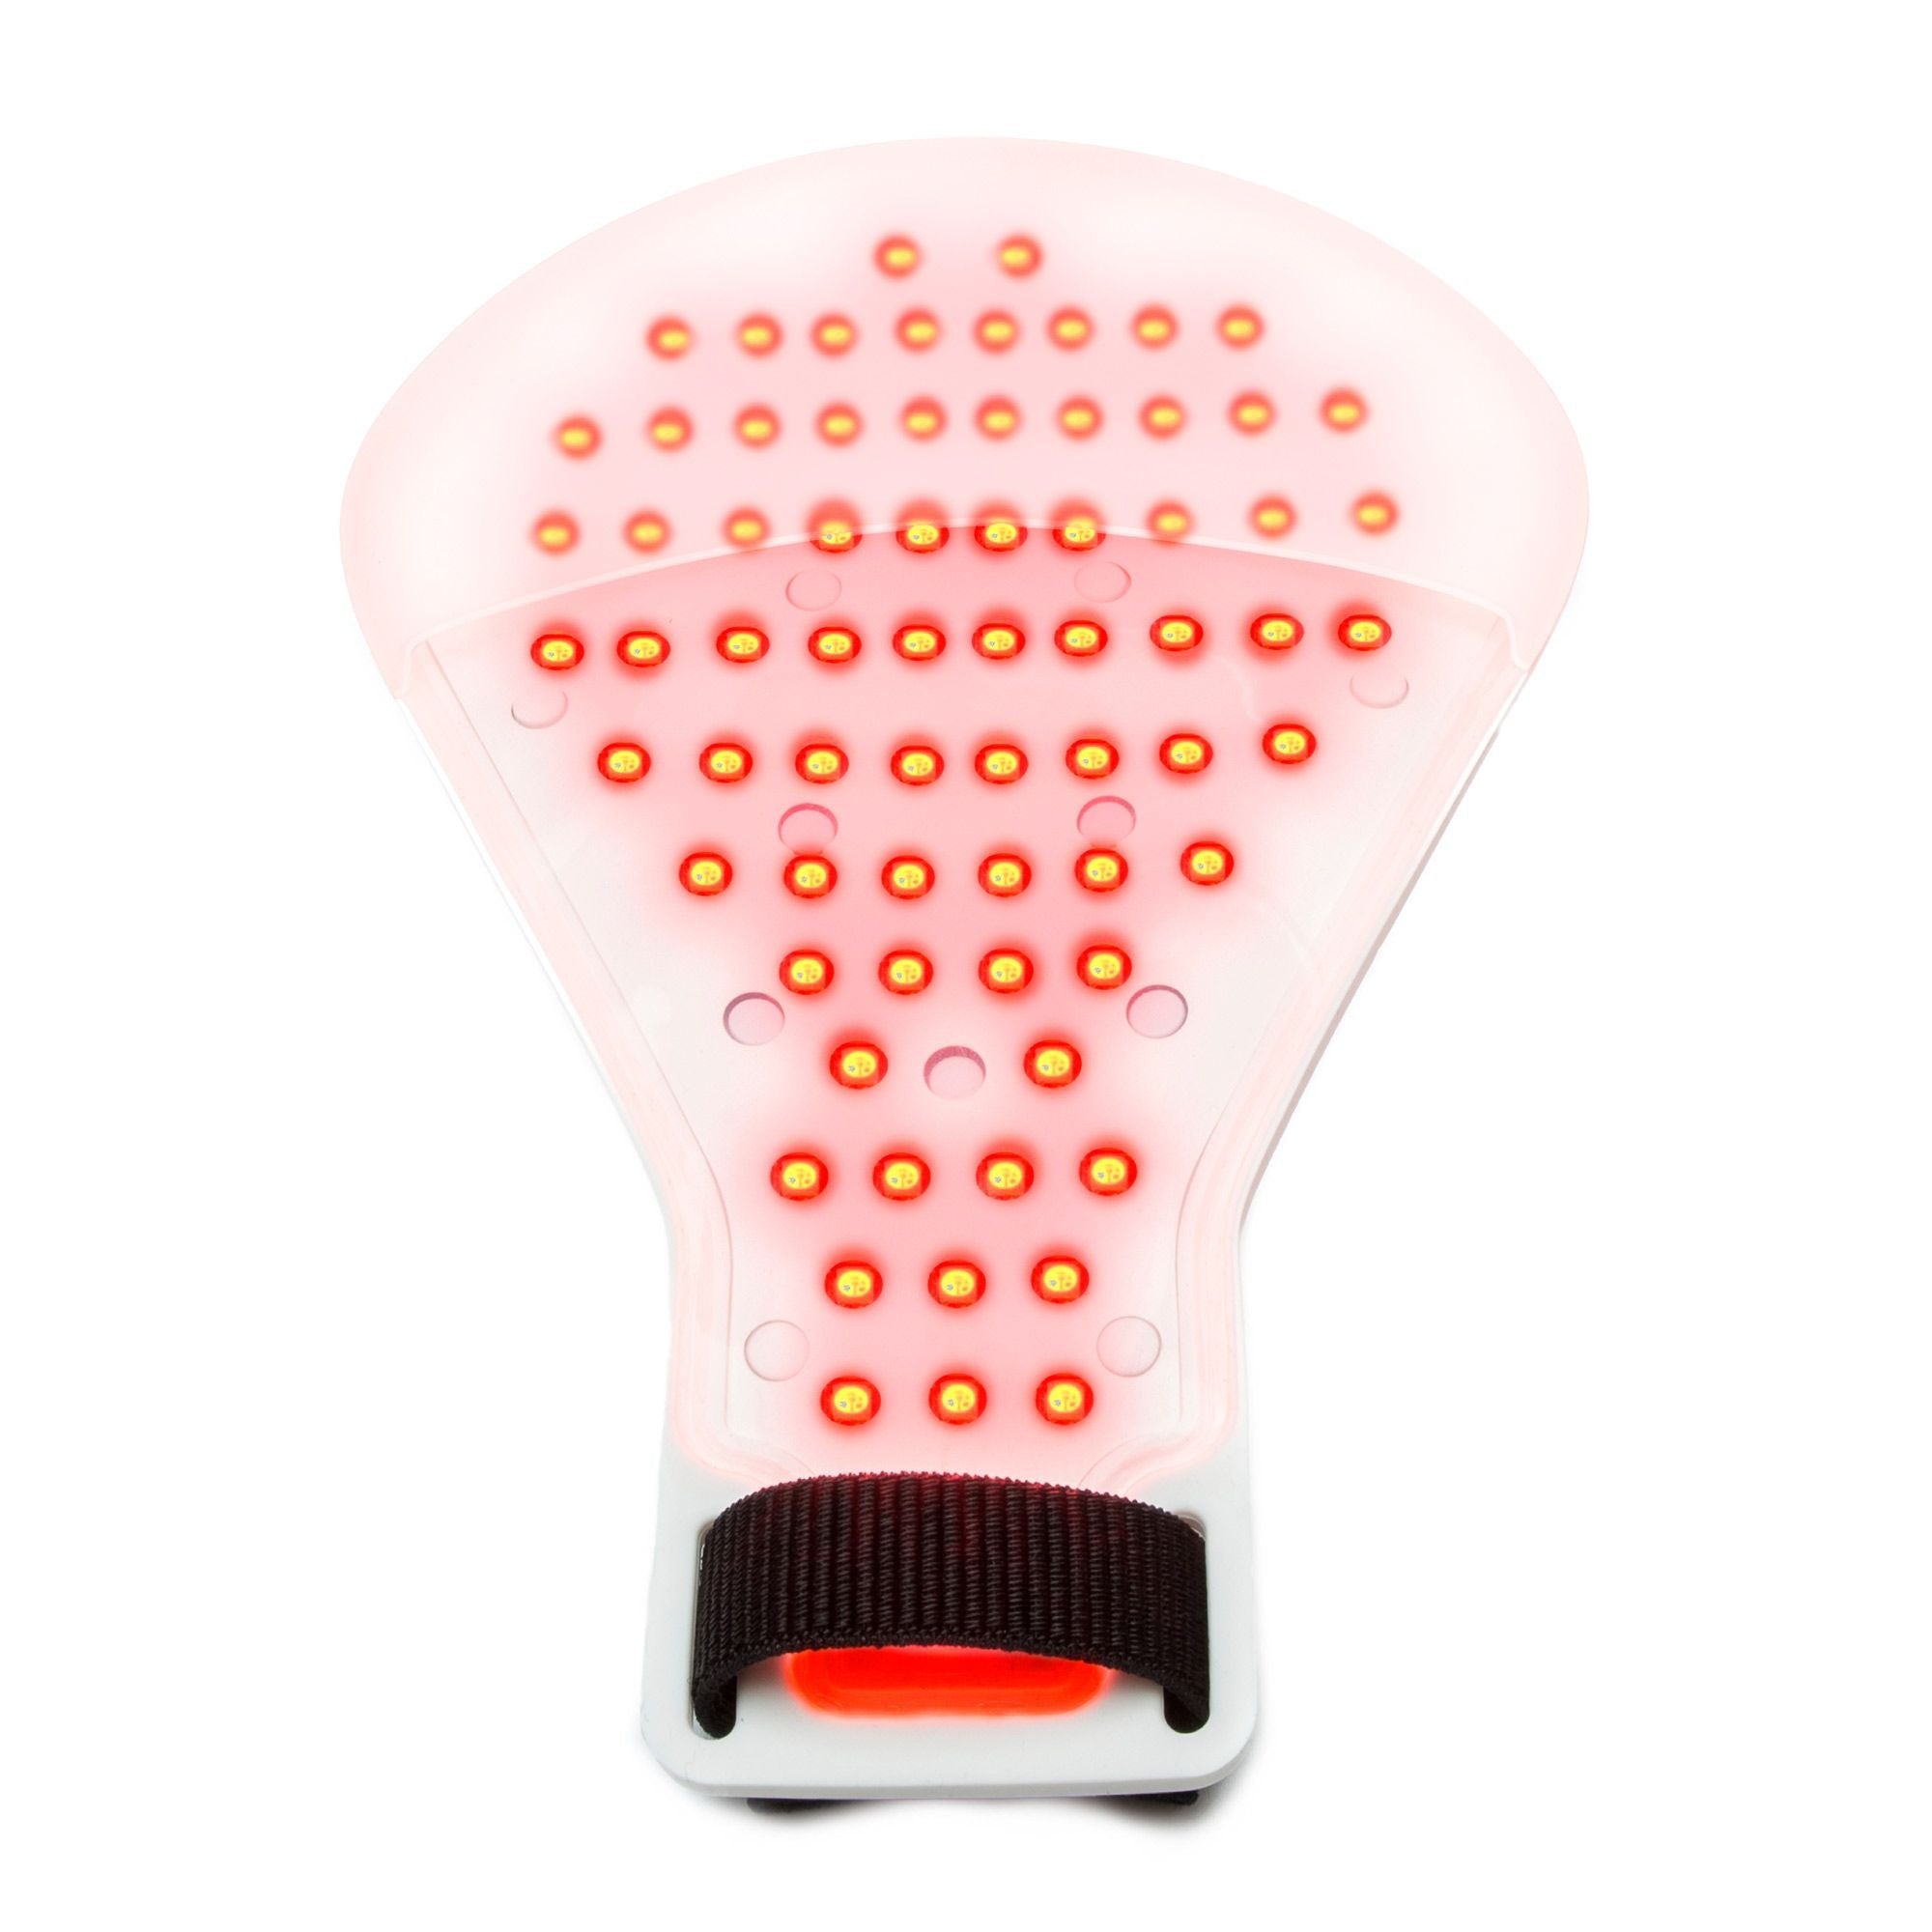 Underneath of handLITE LED light treatment glove showing LED red lights lit up.